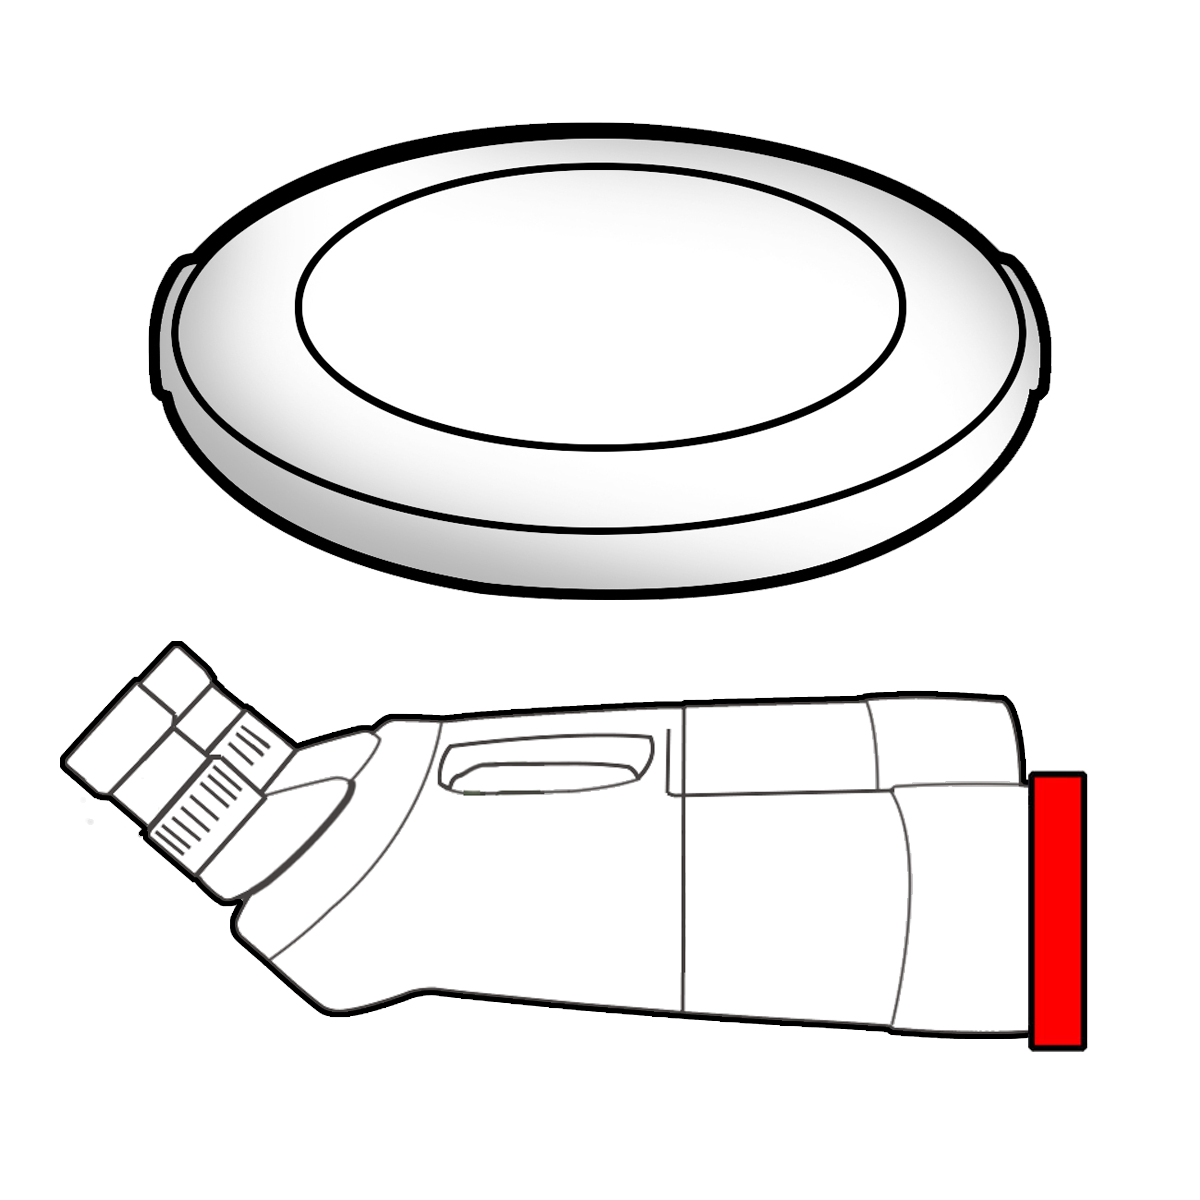 Objective lens protection cap for HIGHLANDER